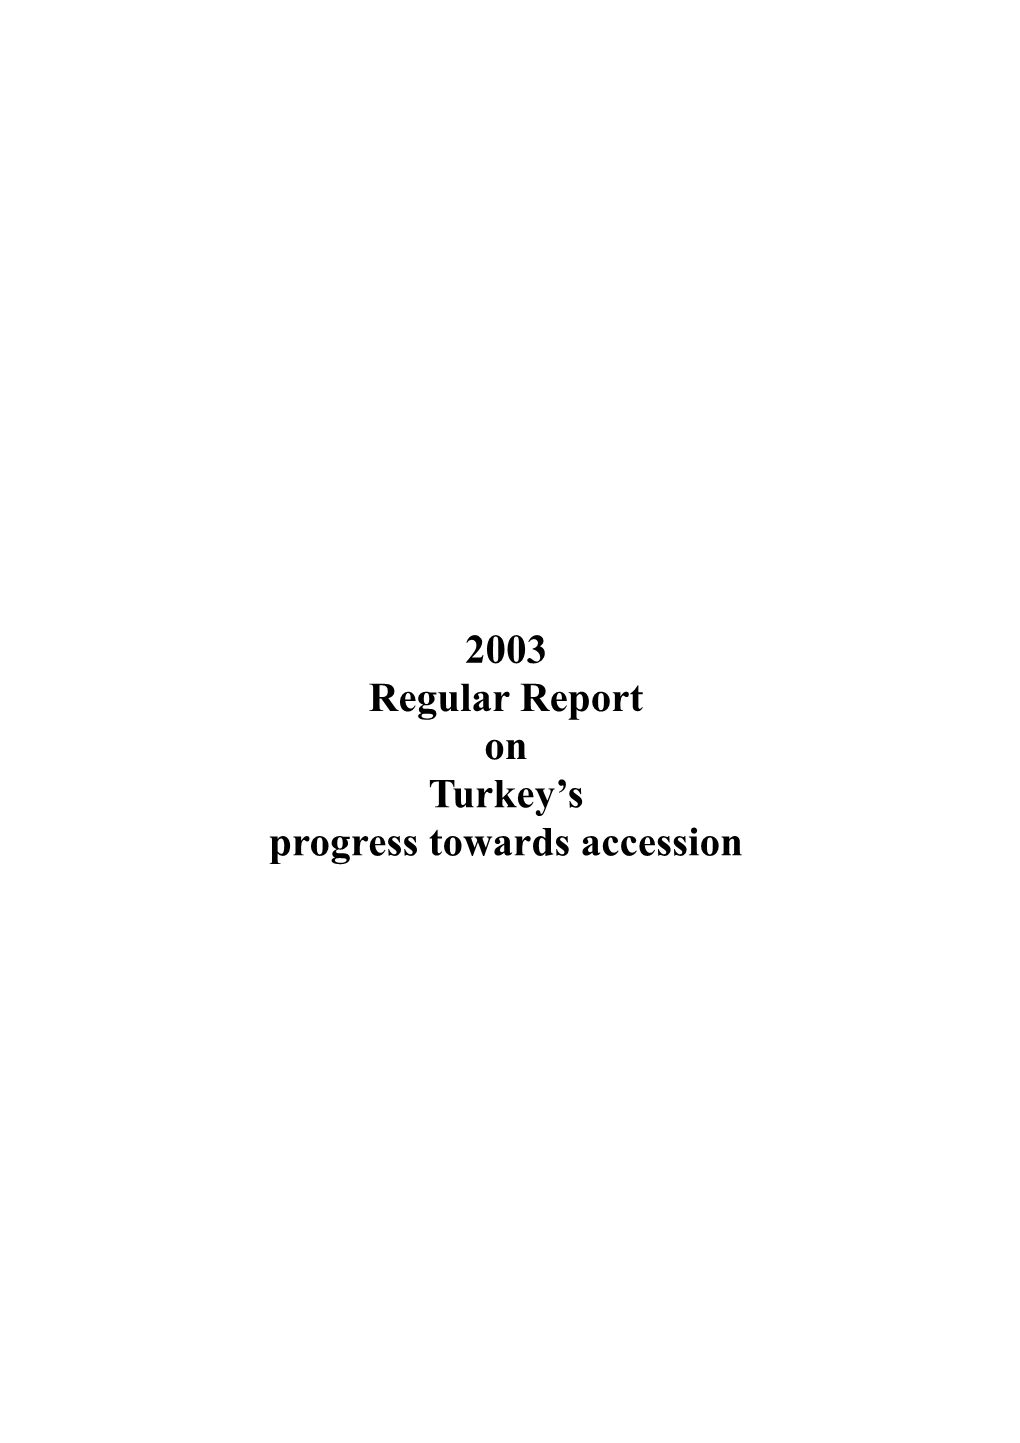 2003 Regular Report on Turkey's Progress Towards Accession